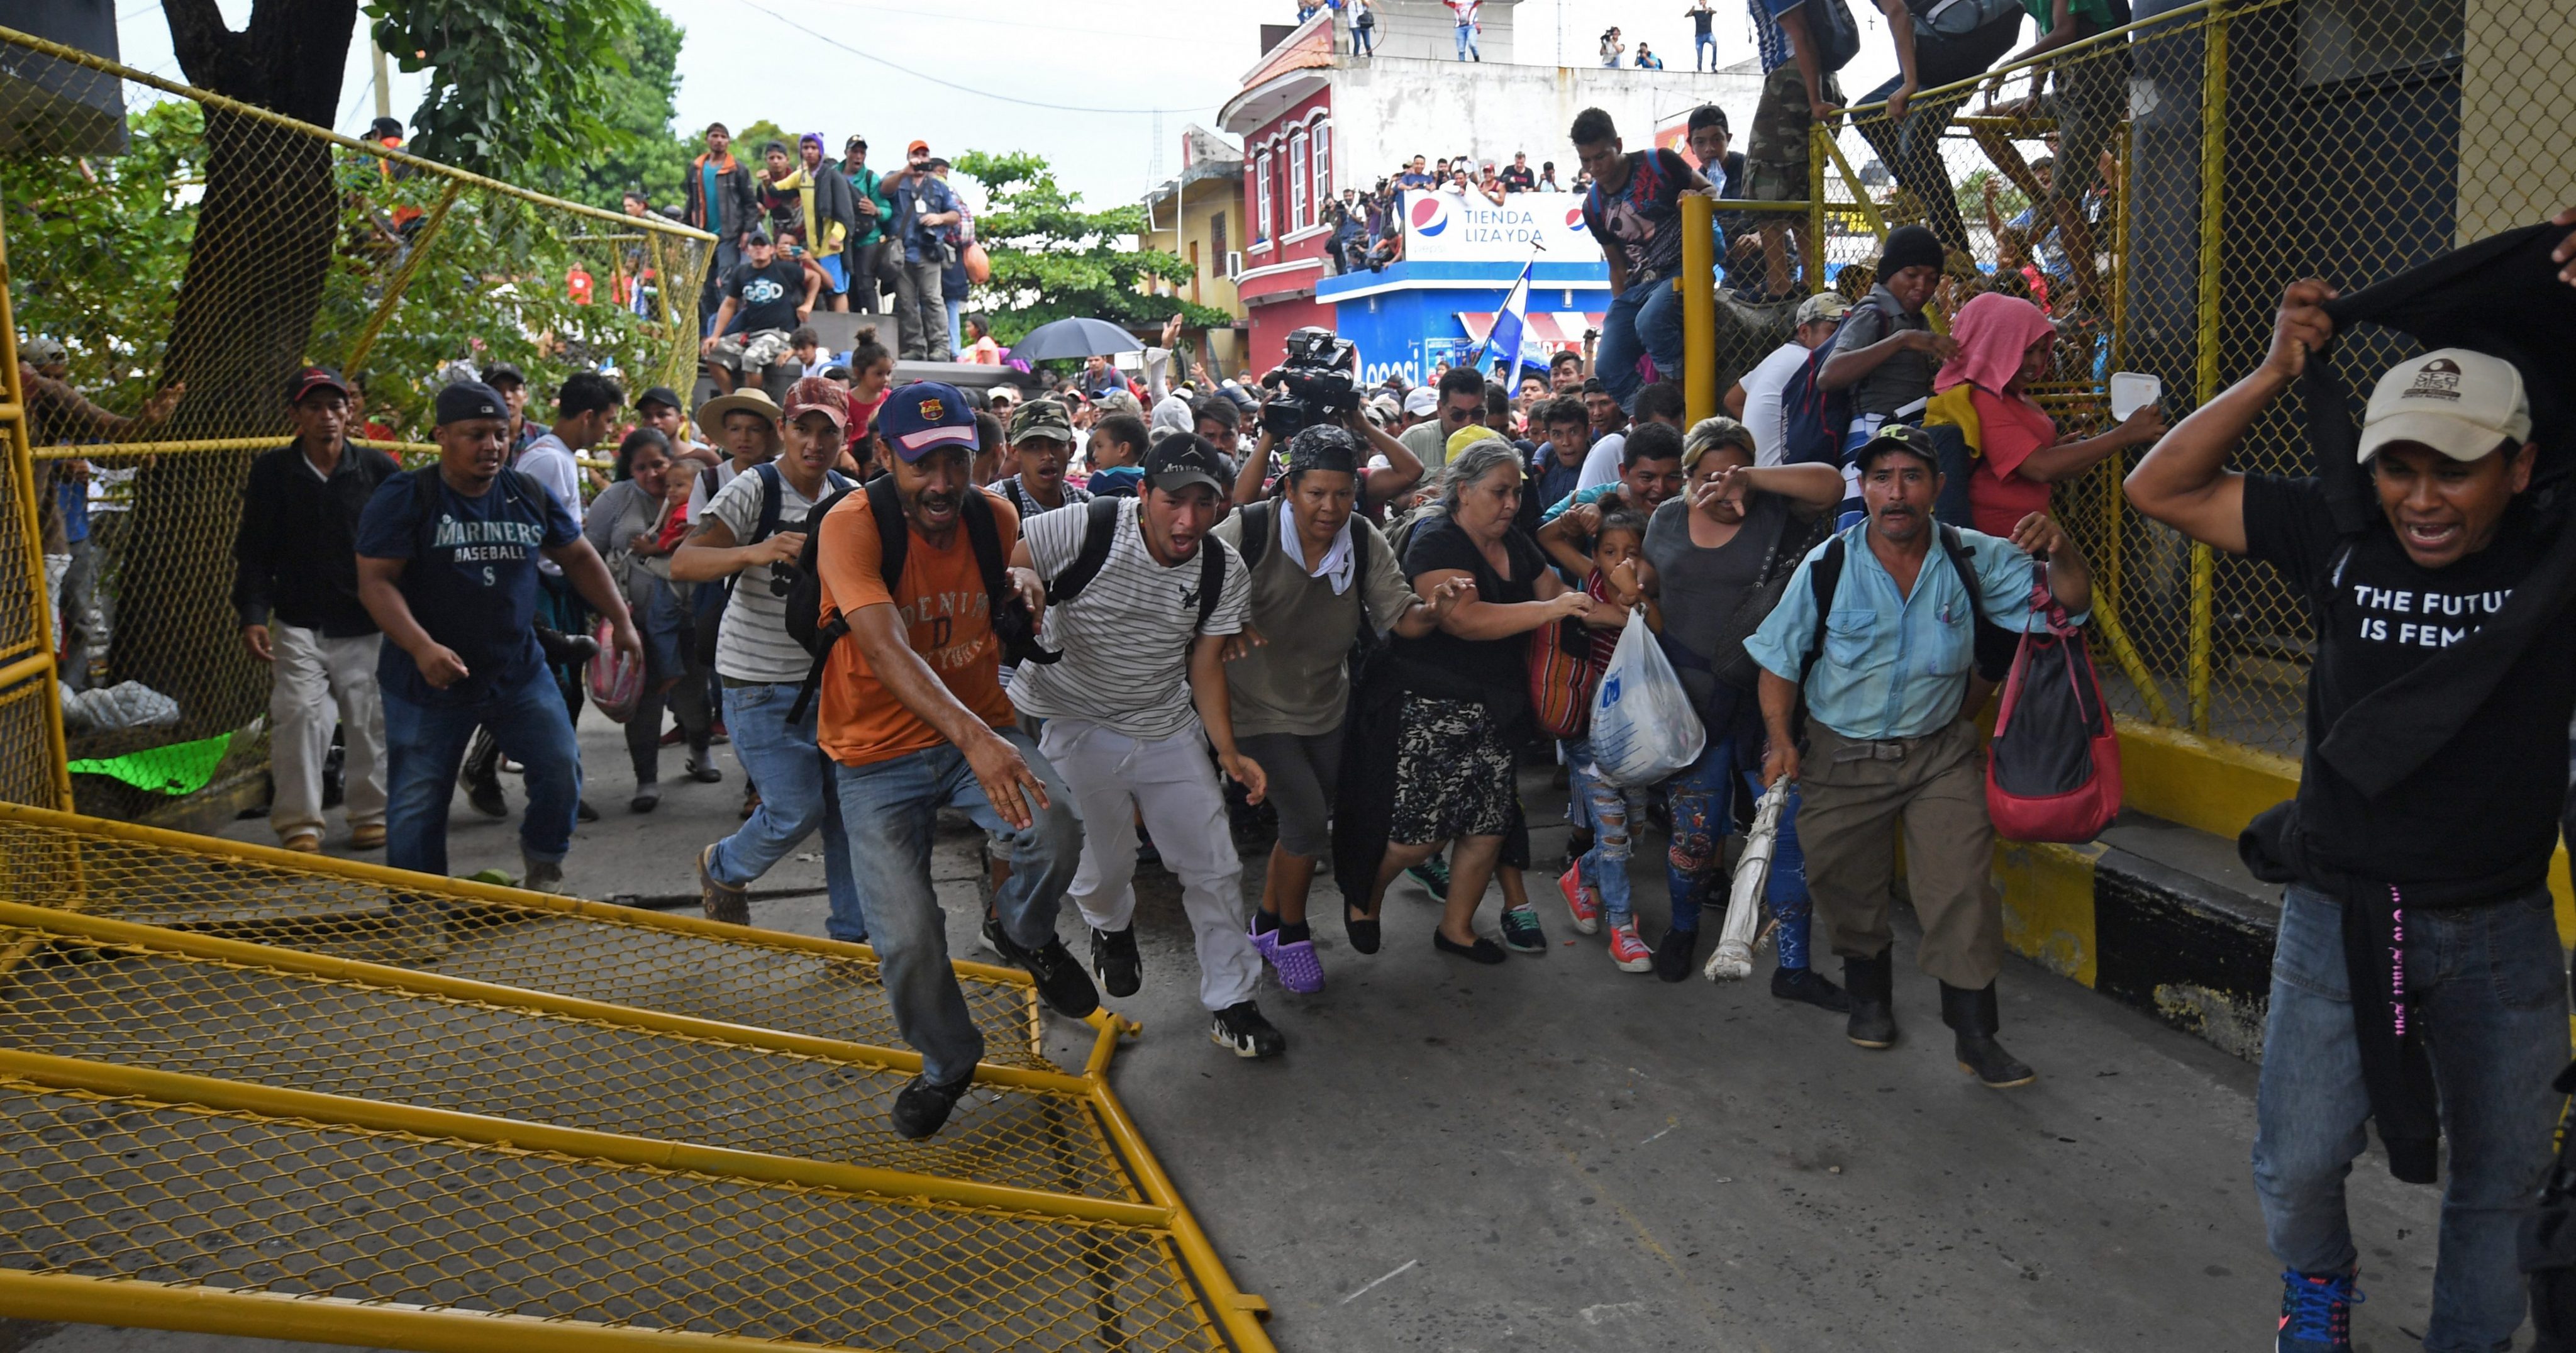 migrantes logran llegar a México pese a cercos policiales